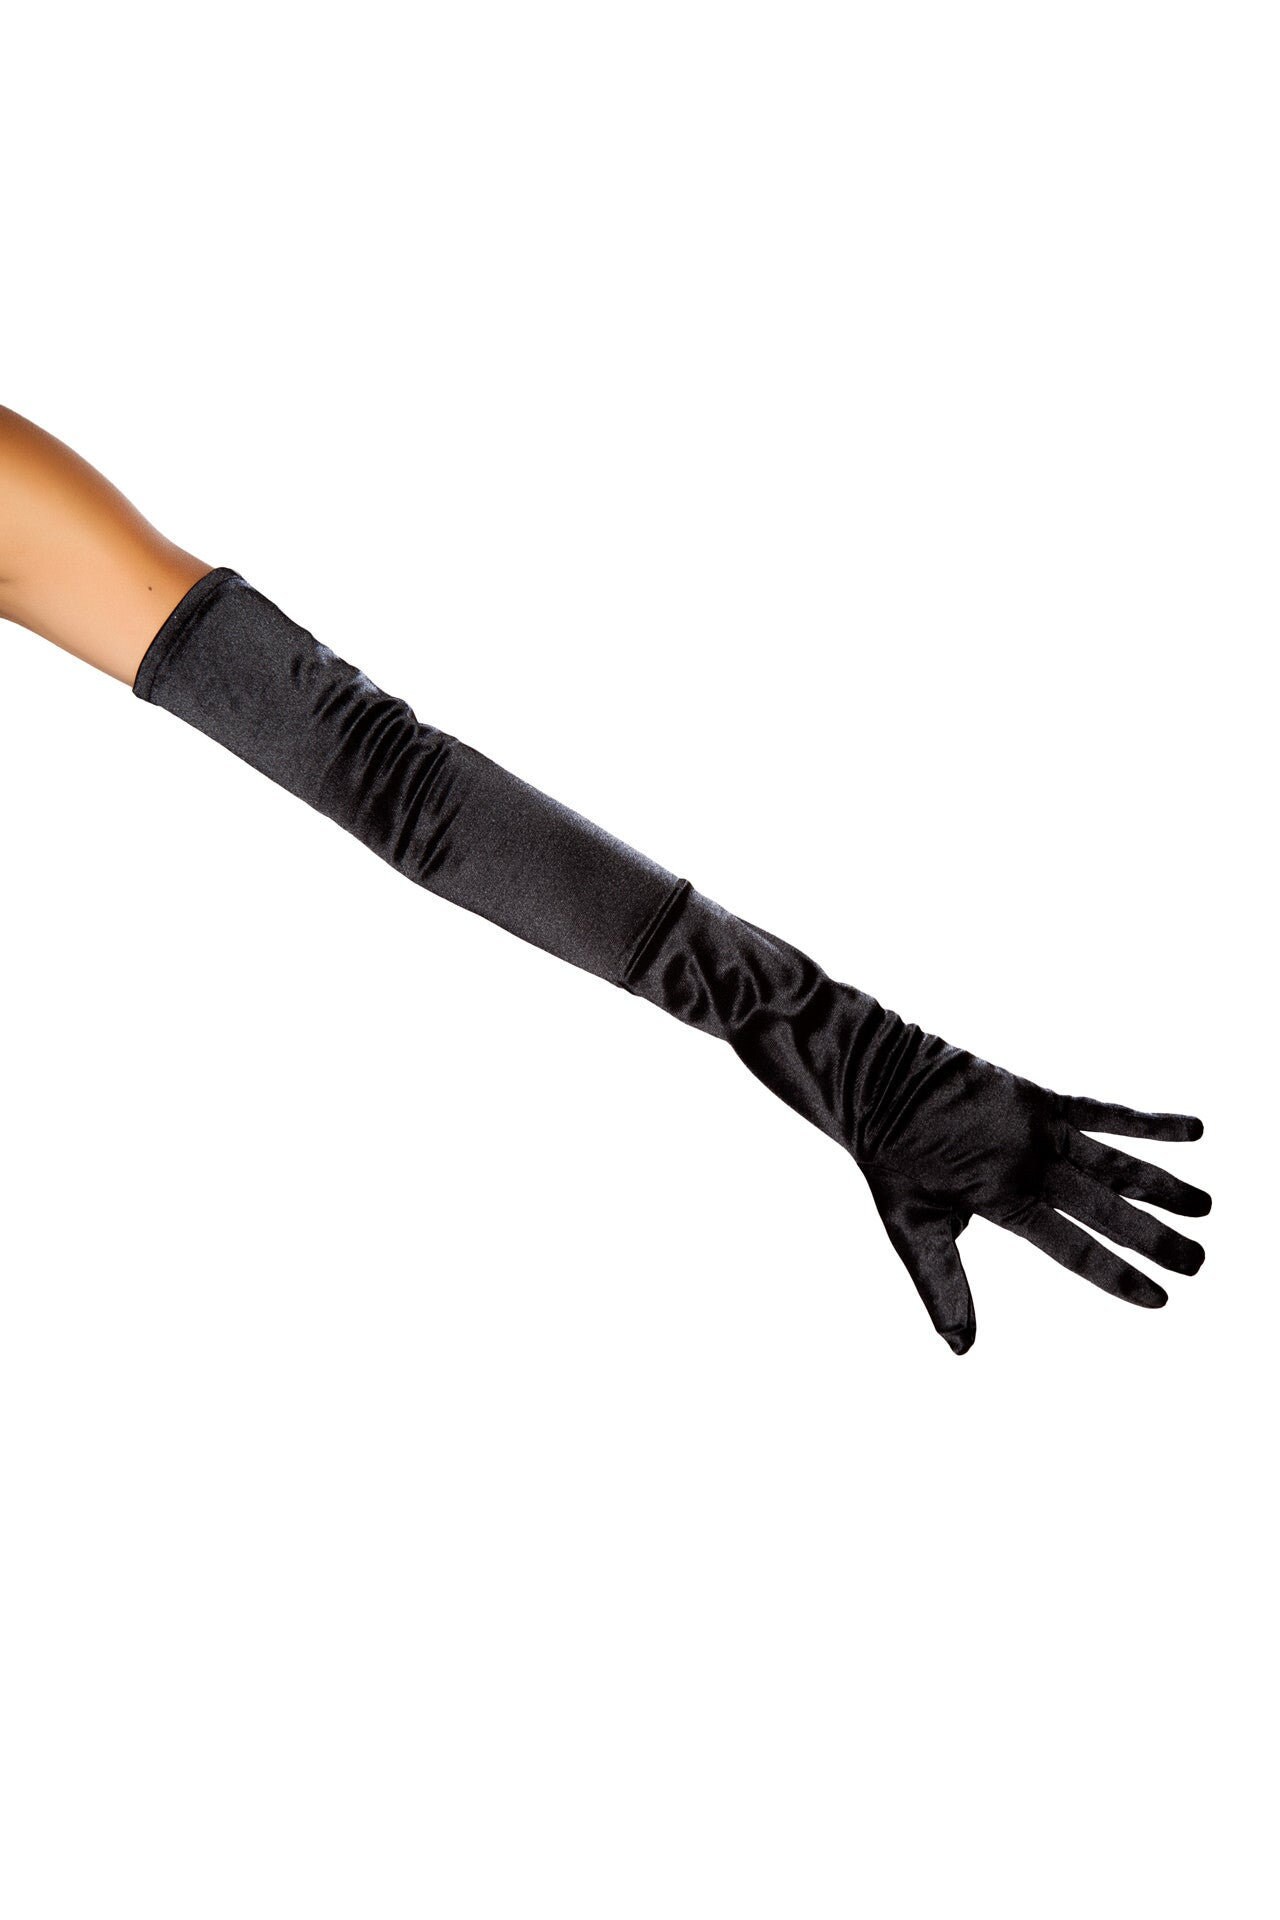 2pc. Stretch Satin Gloves Halloween Costume Accessories 